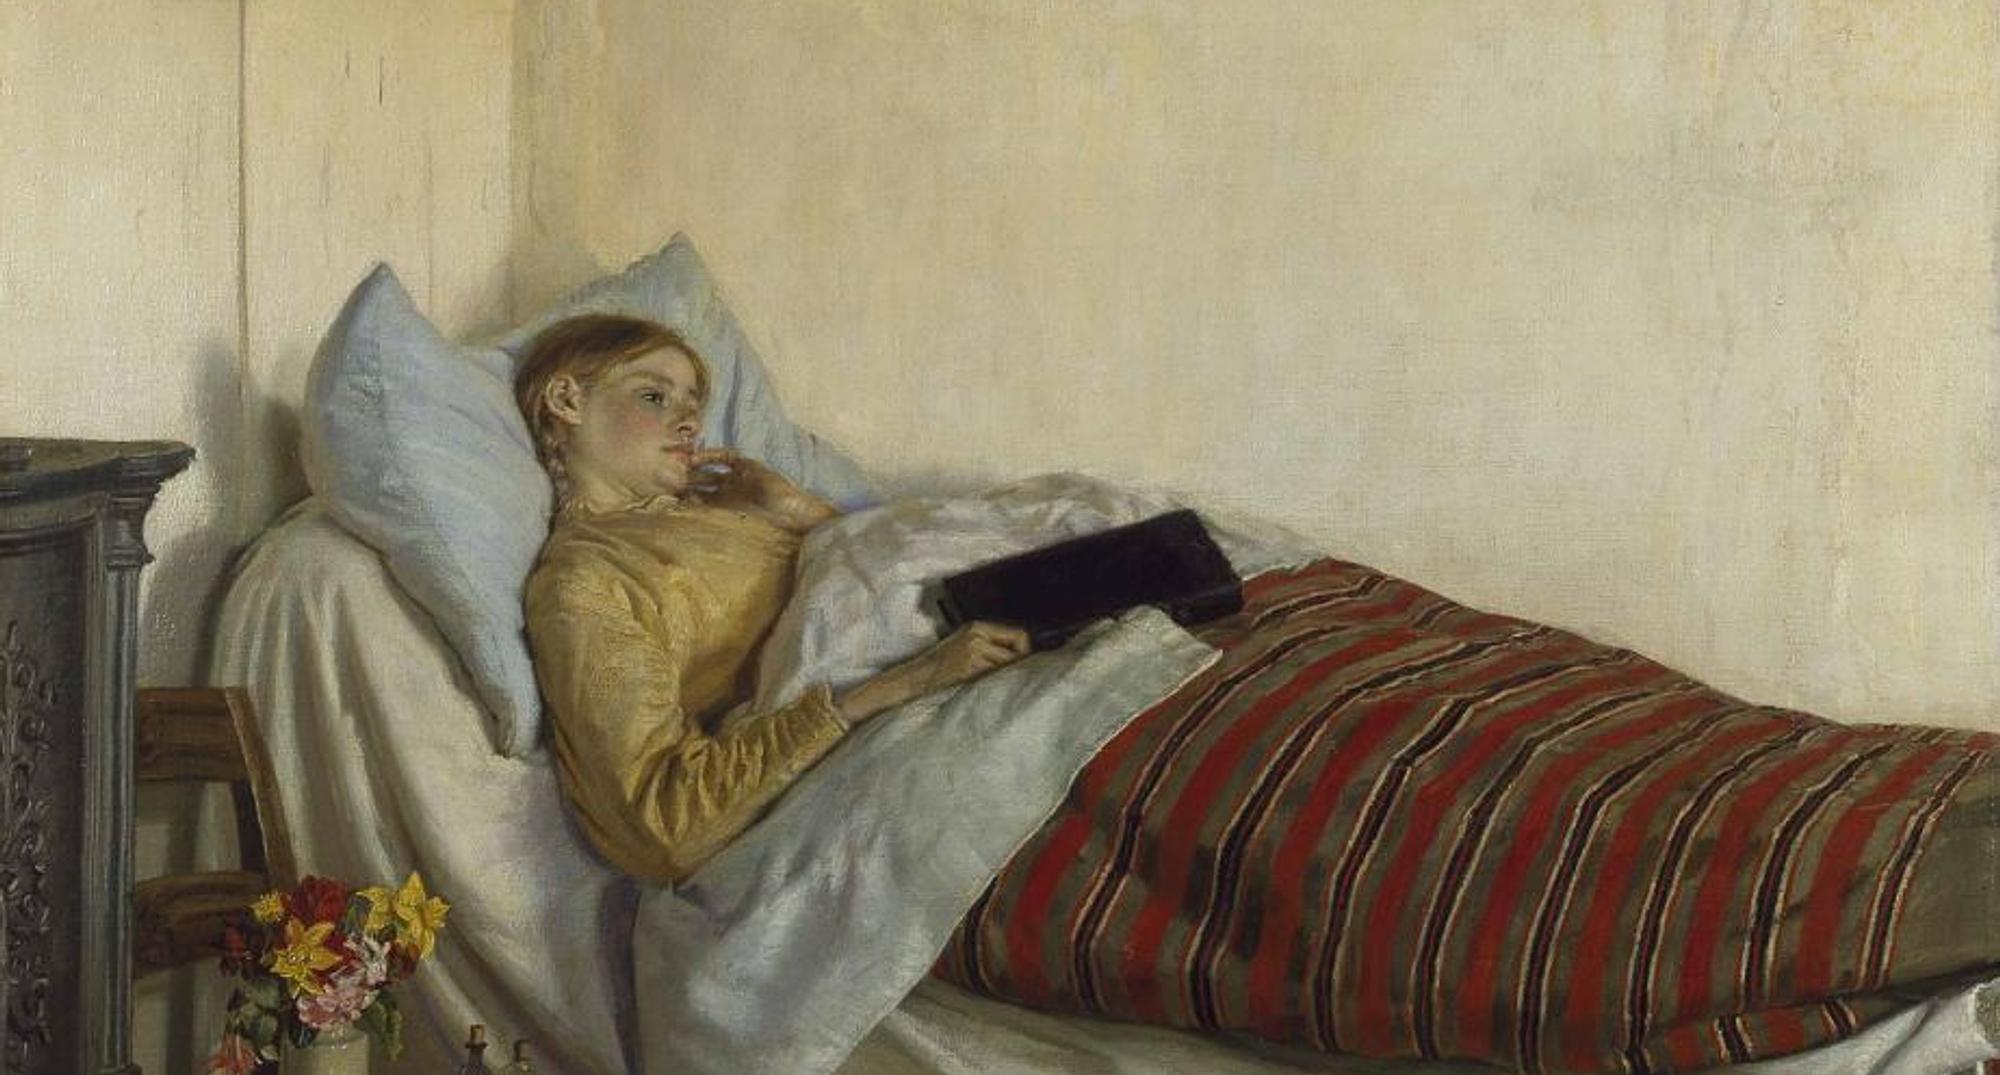 Michael Ancher, En syg ung pige. Tine Normand, 1883
